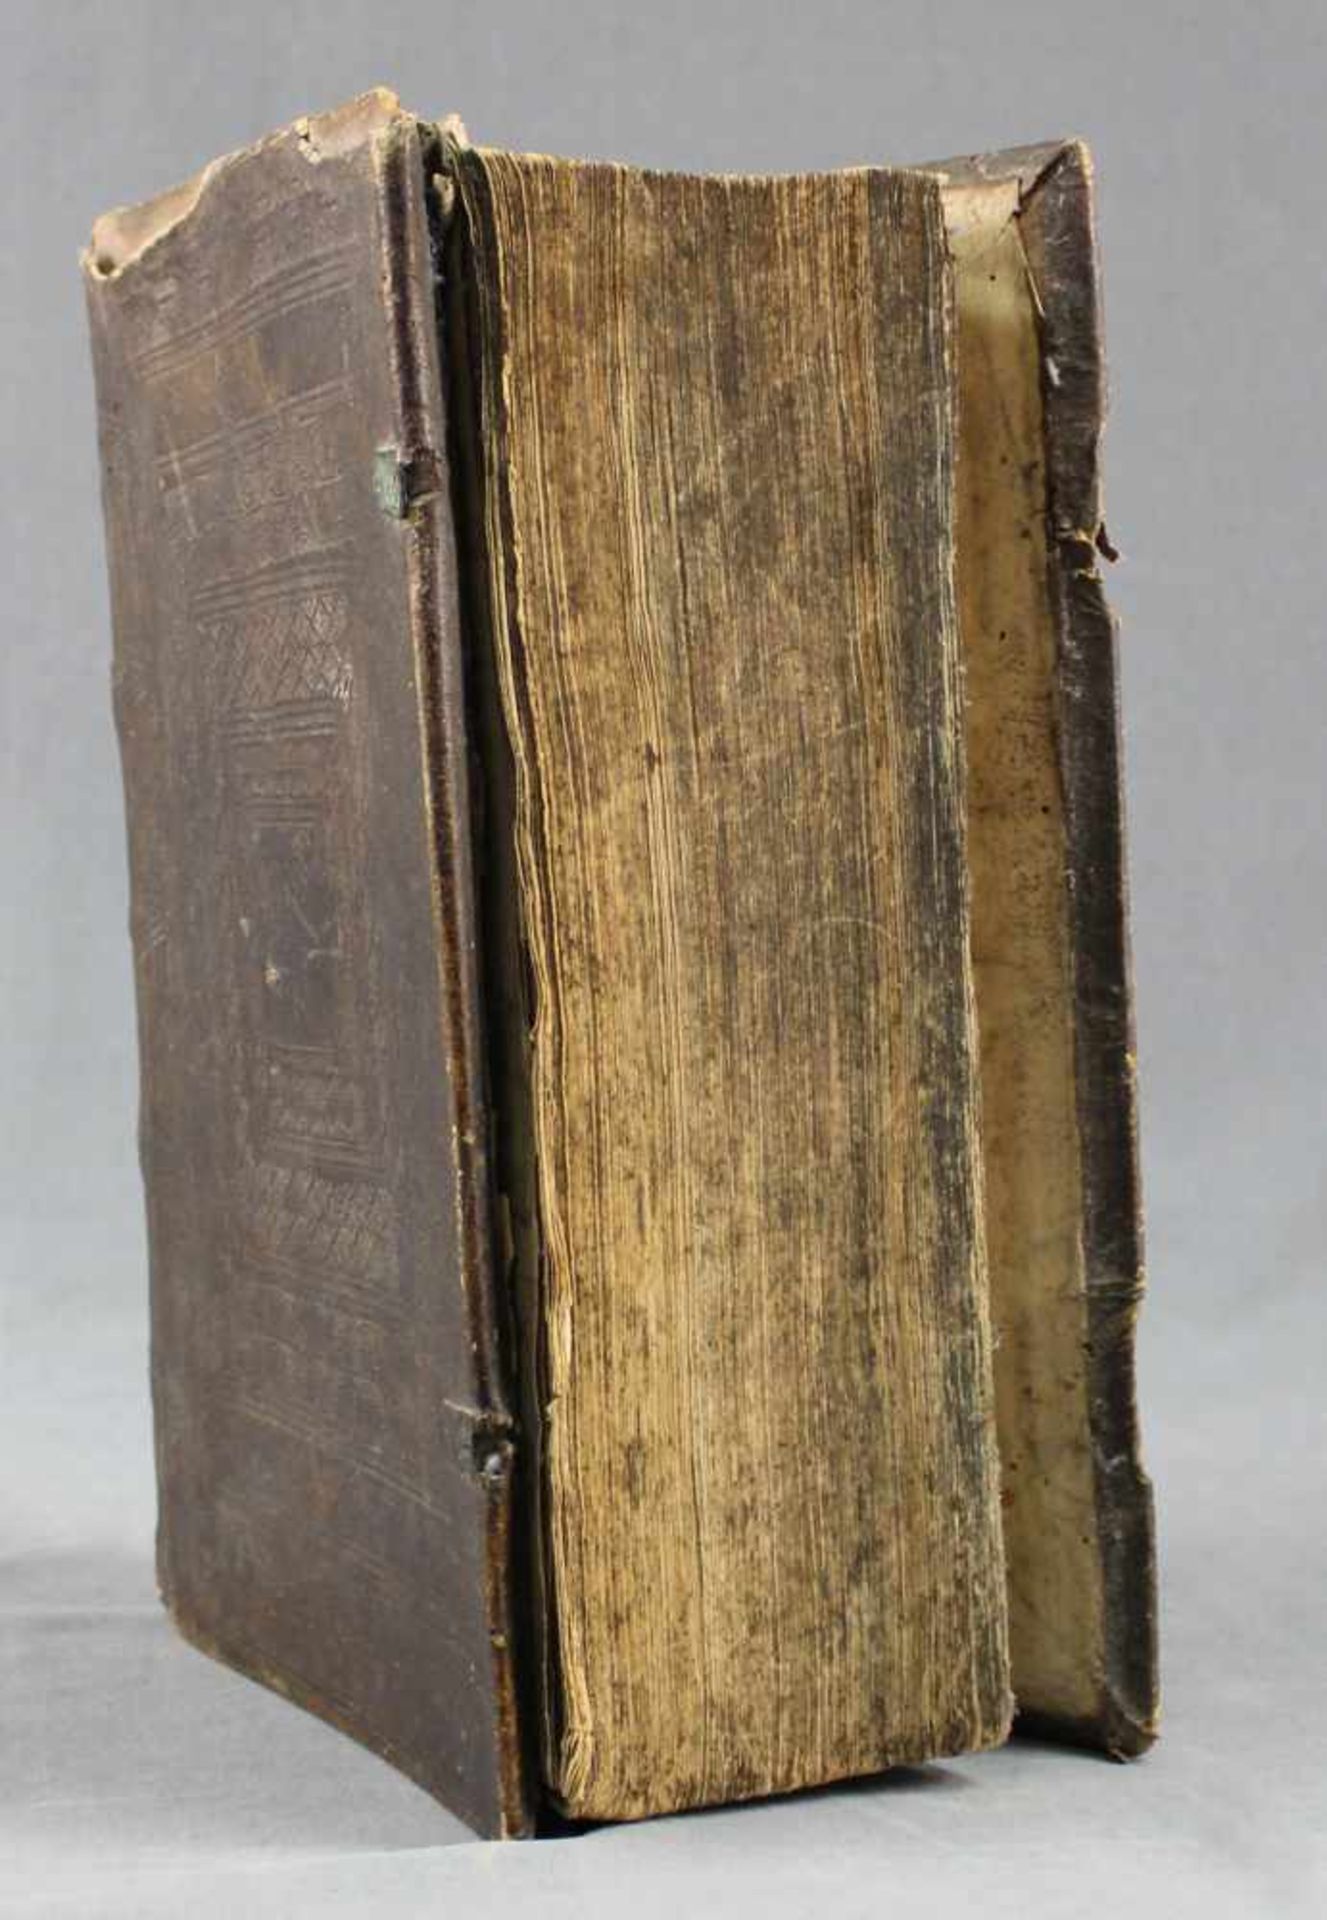 Illustrierte Bibel, Nürnberg 1667.36 cm x 25 cm. U.a. teils restauriert, teils unvollständig. - Image 4 of 9